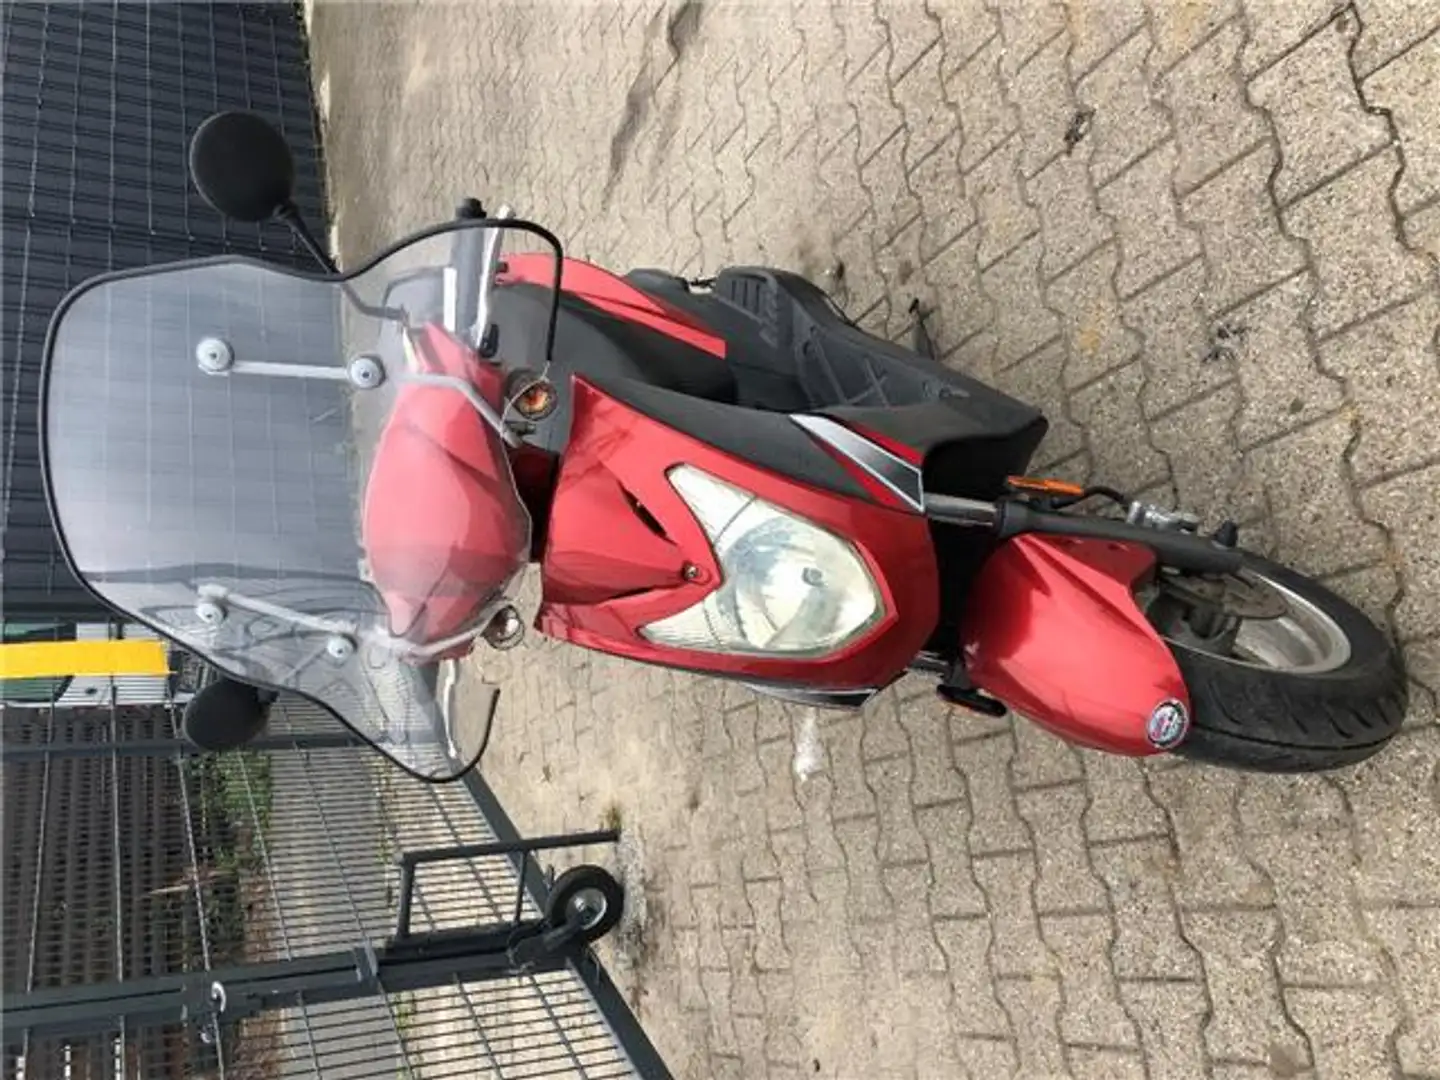 Kymco Agility 50 Roller/Scooter in Rot gebraucht in Herne für € 350,-